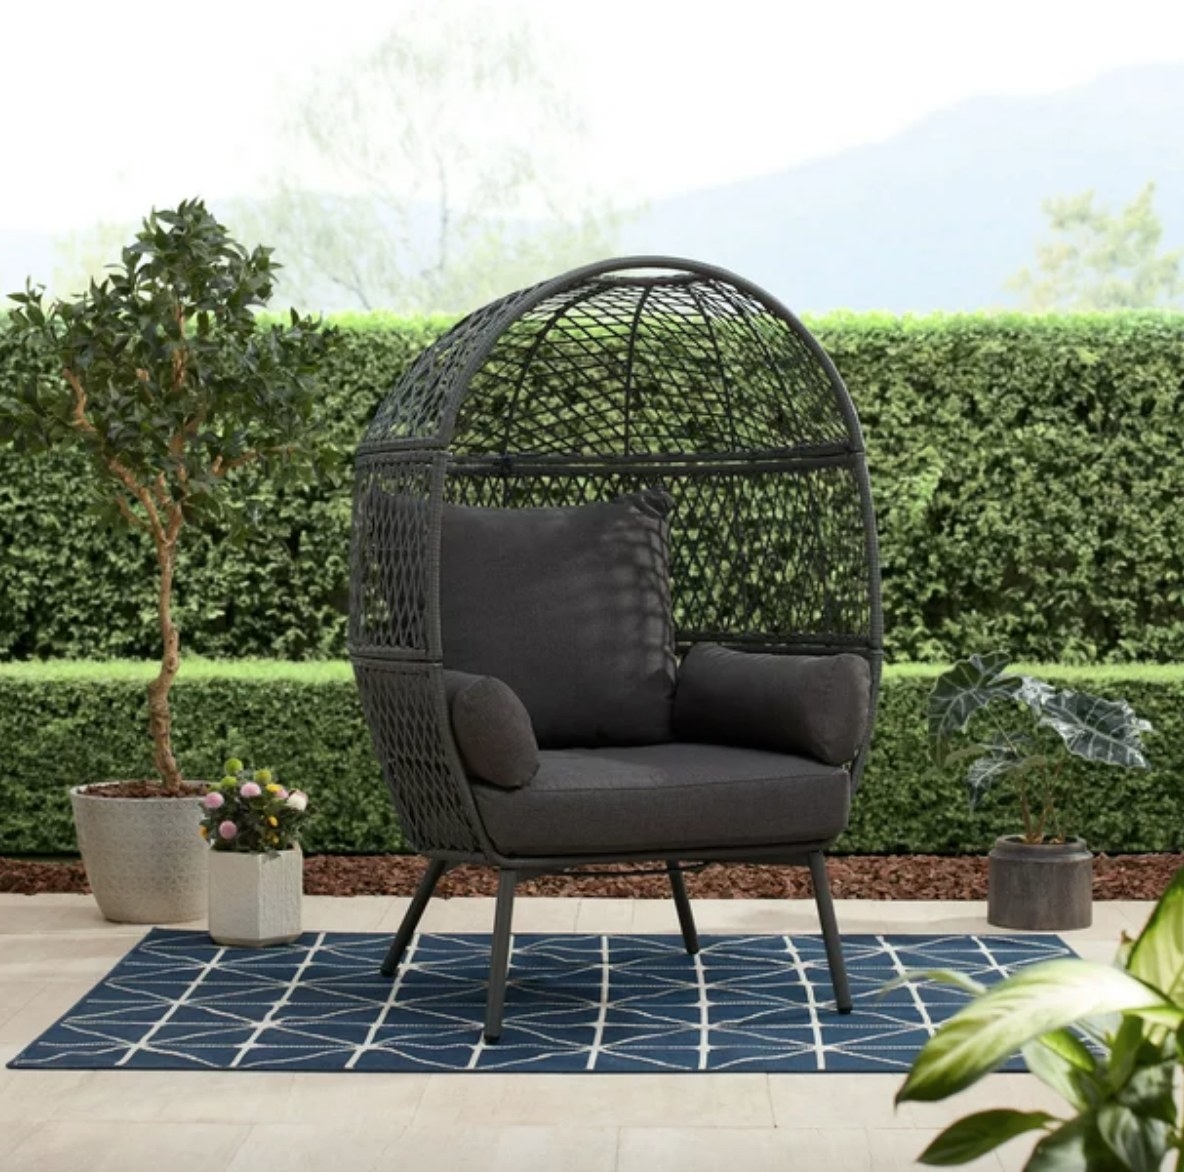 Charcoal gray egg chair on patio